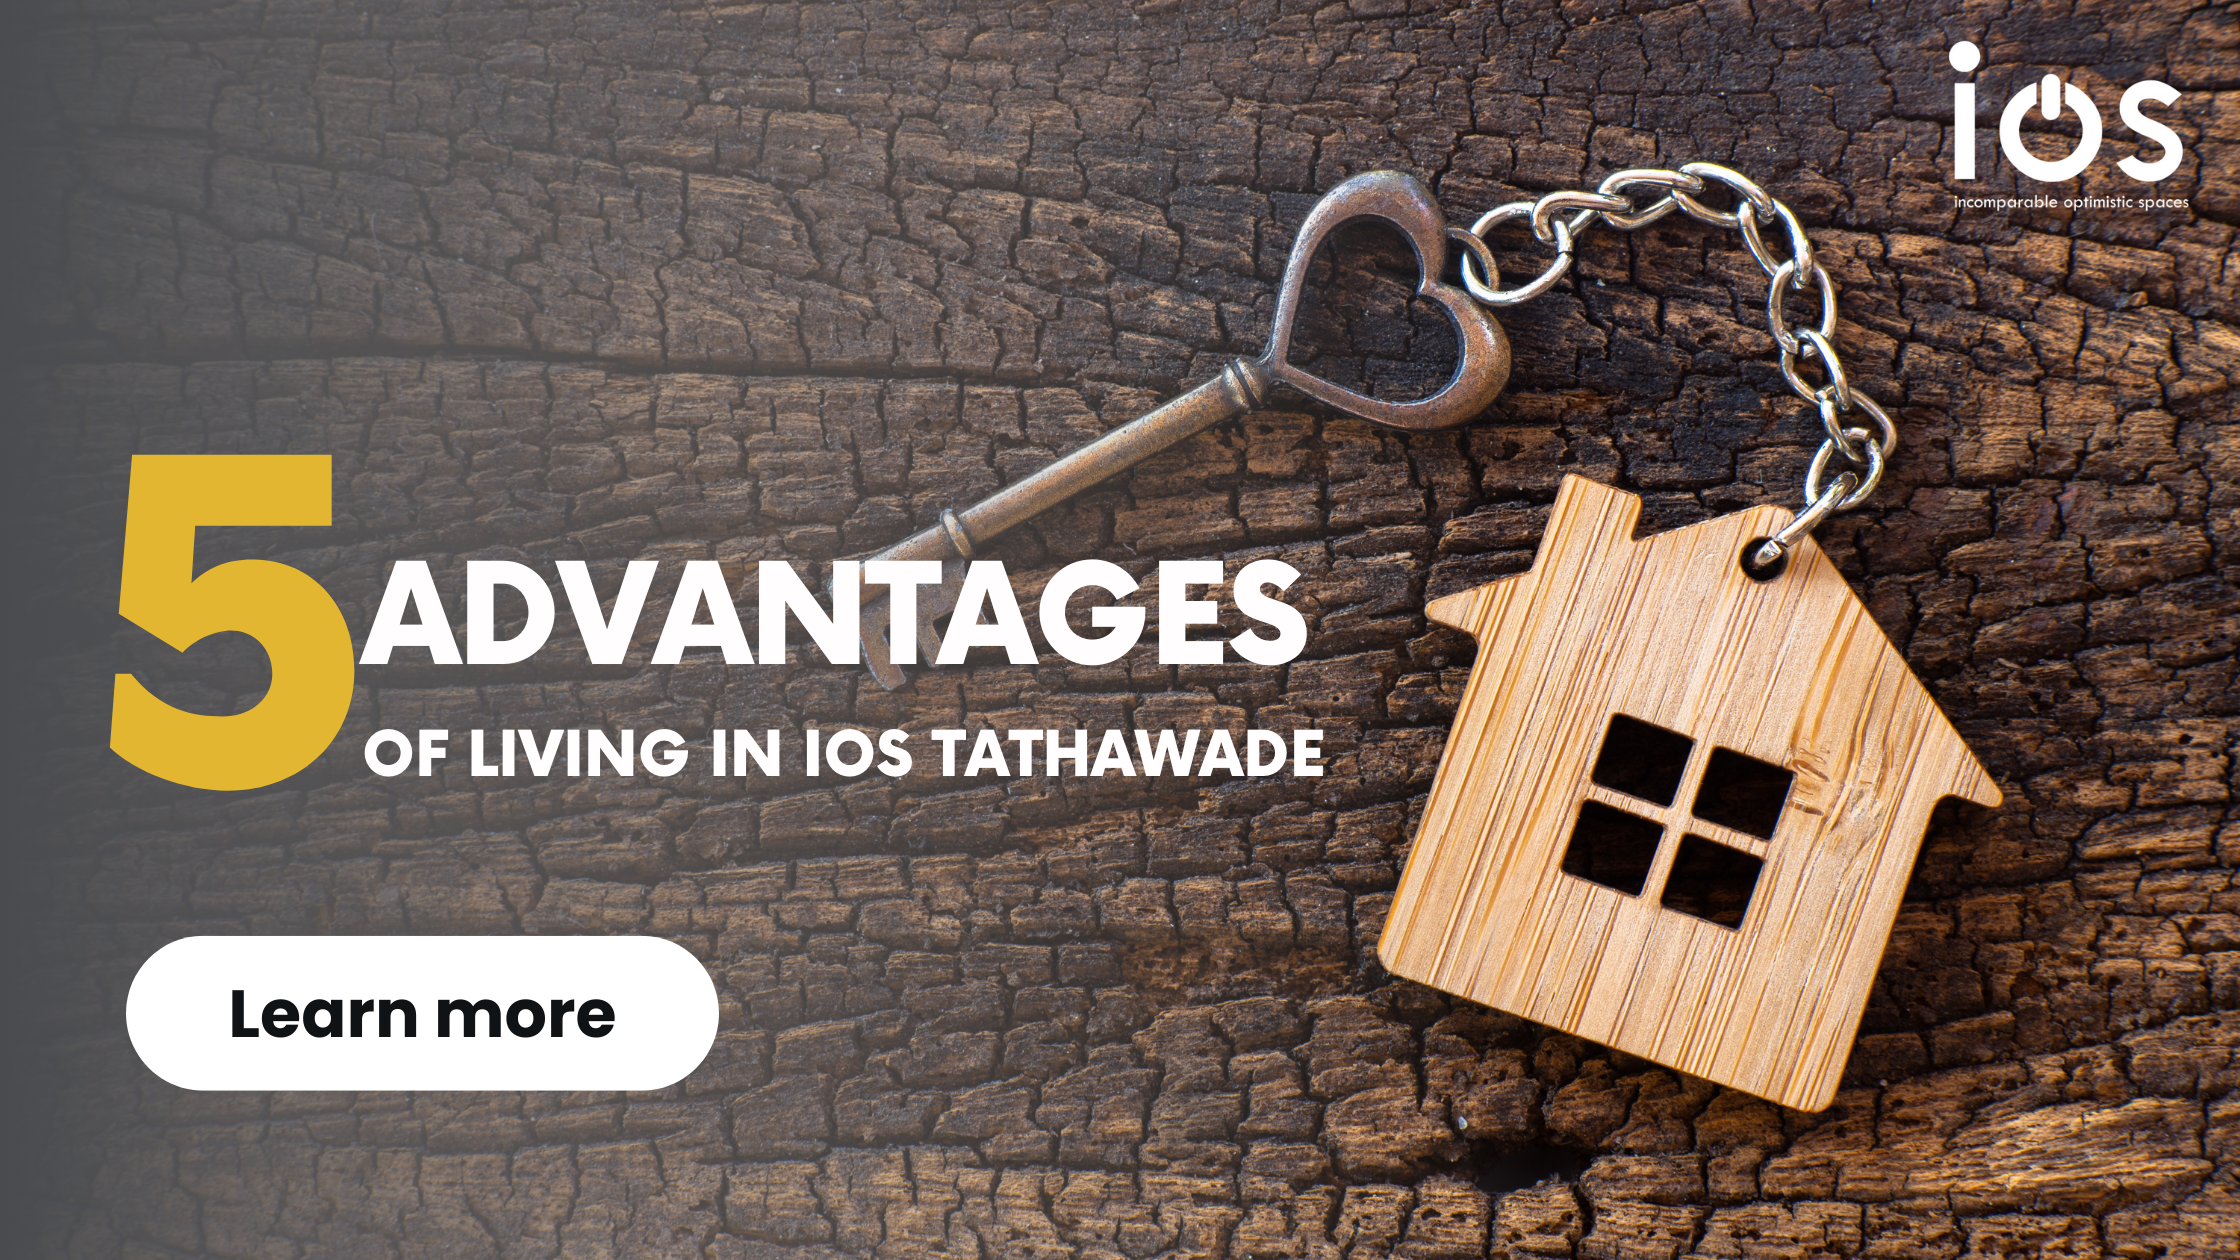 5 advantages of living in iOS Tathawade